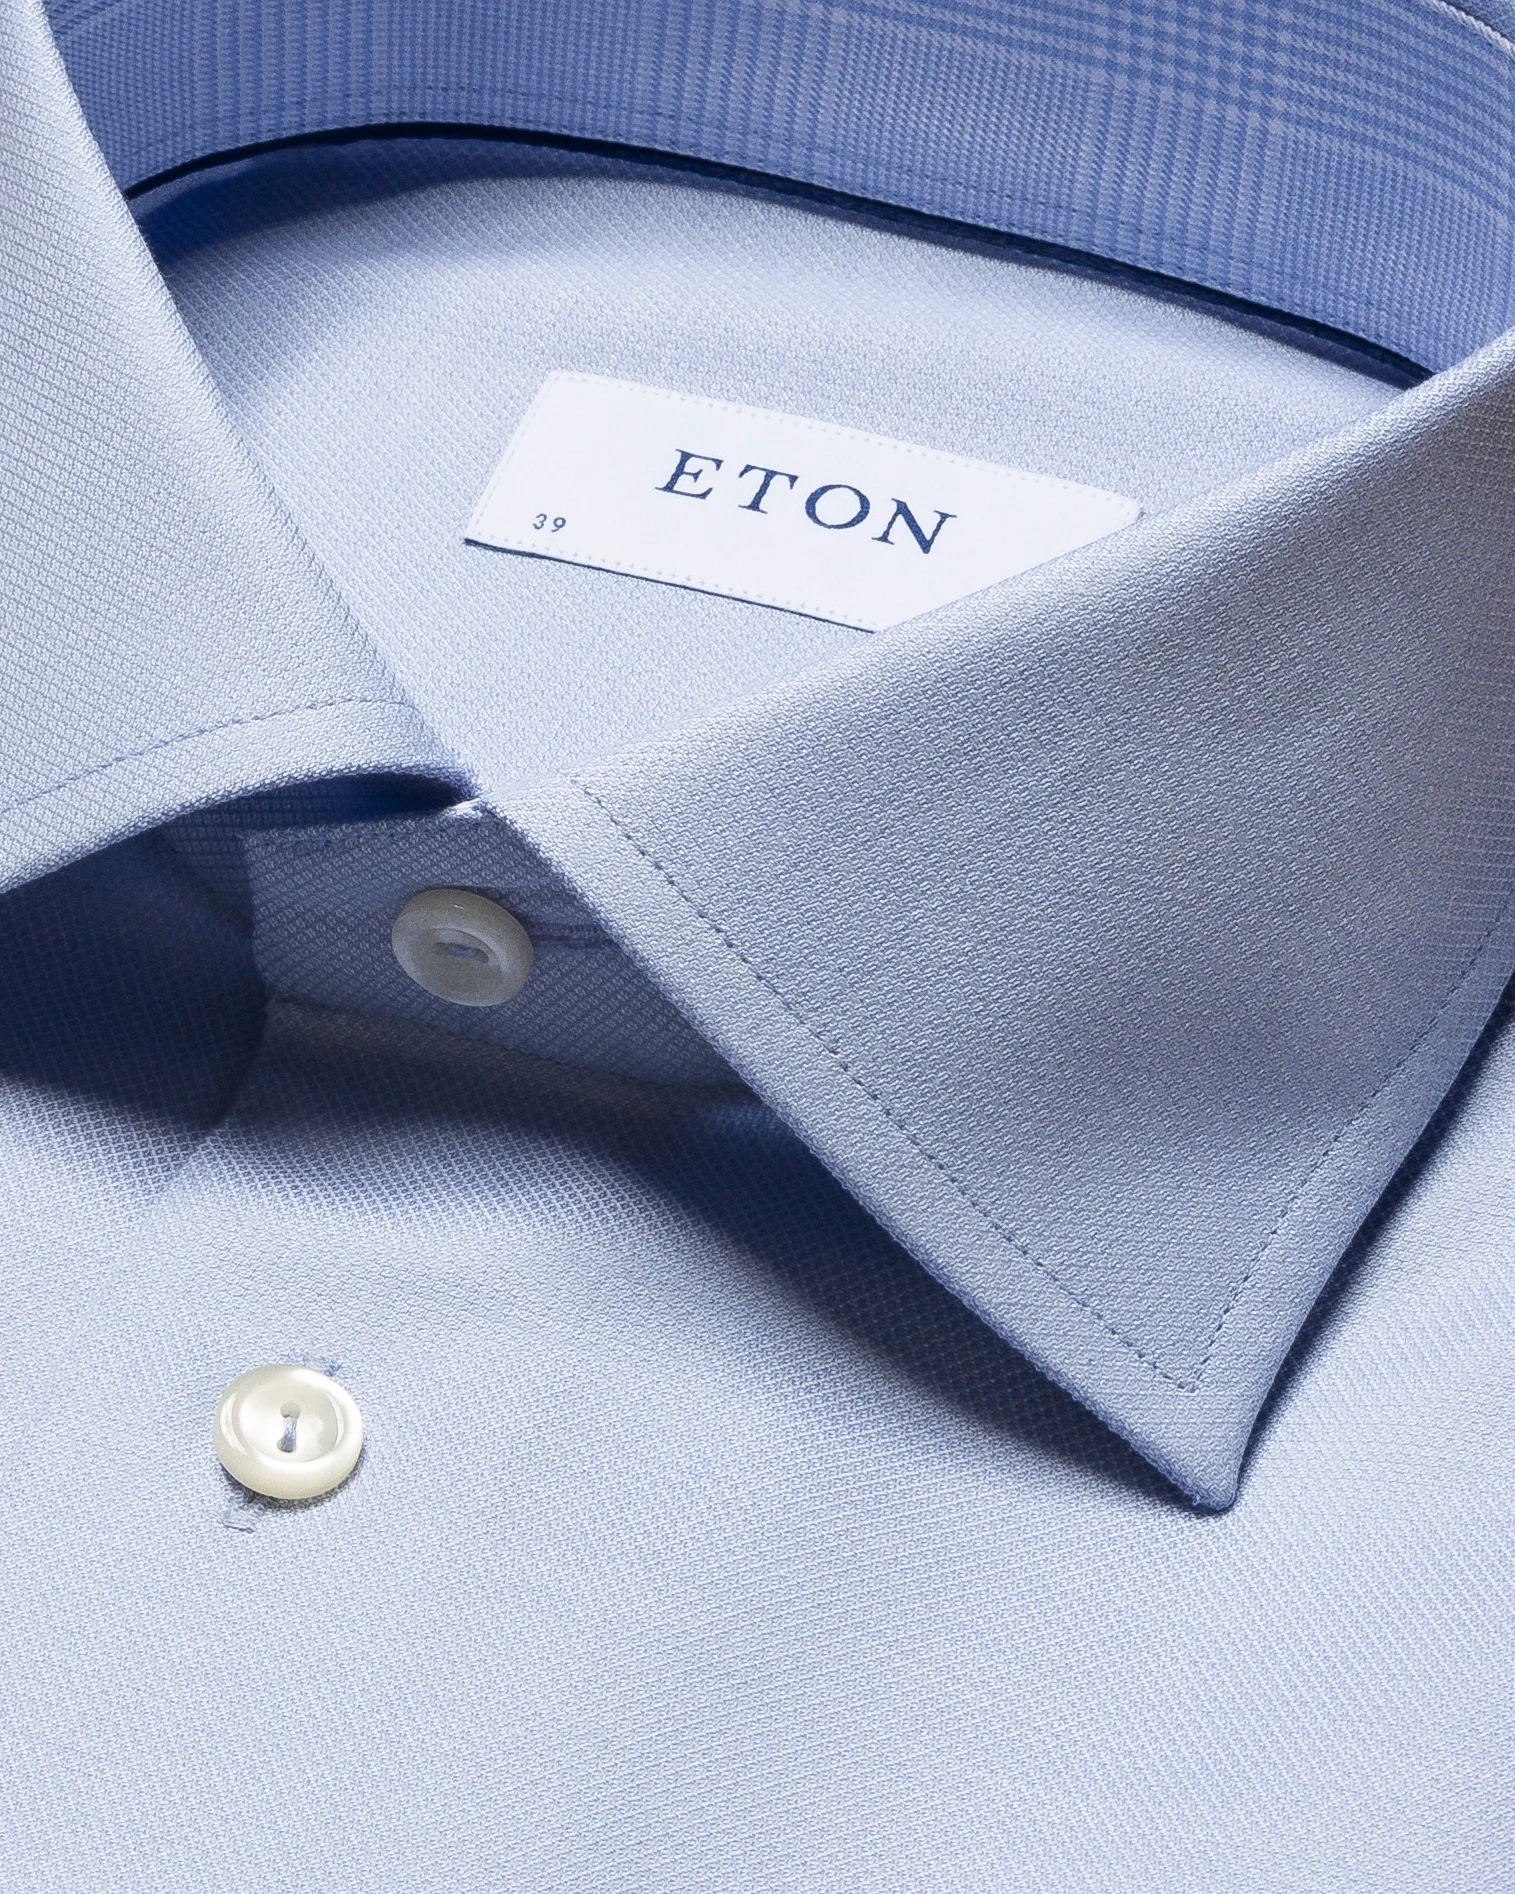 Eton - light blue cotton lyocell stretch shirt